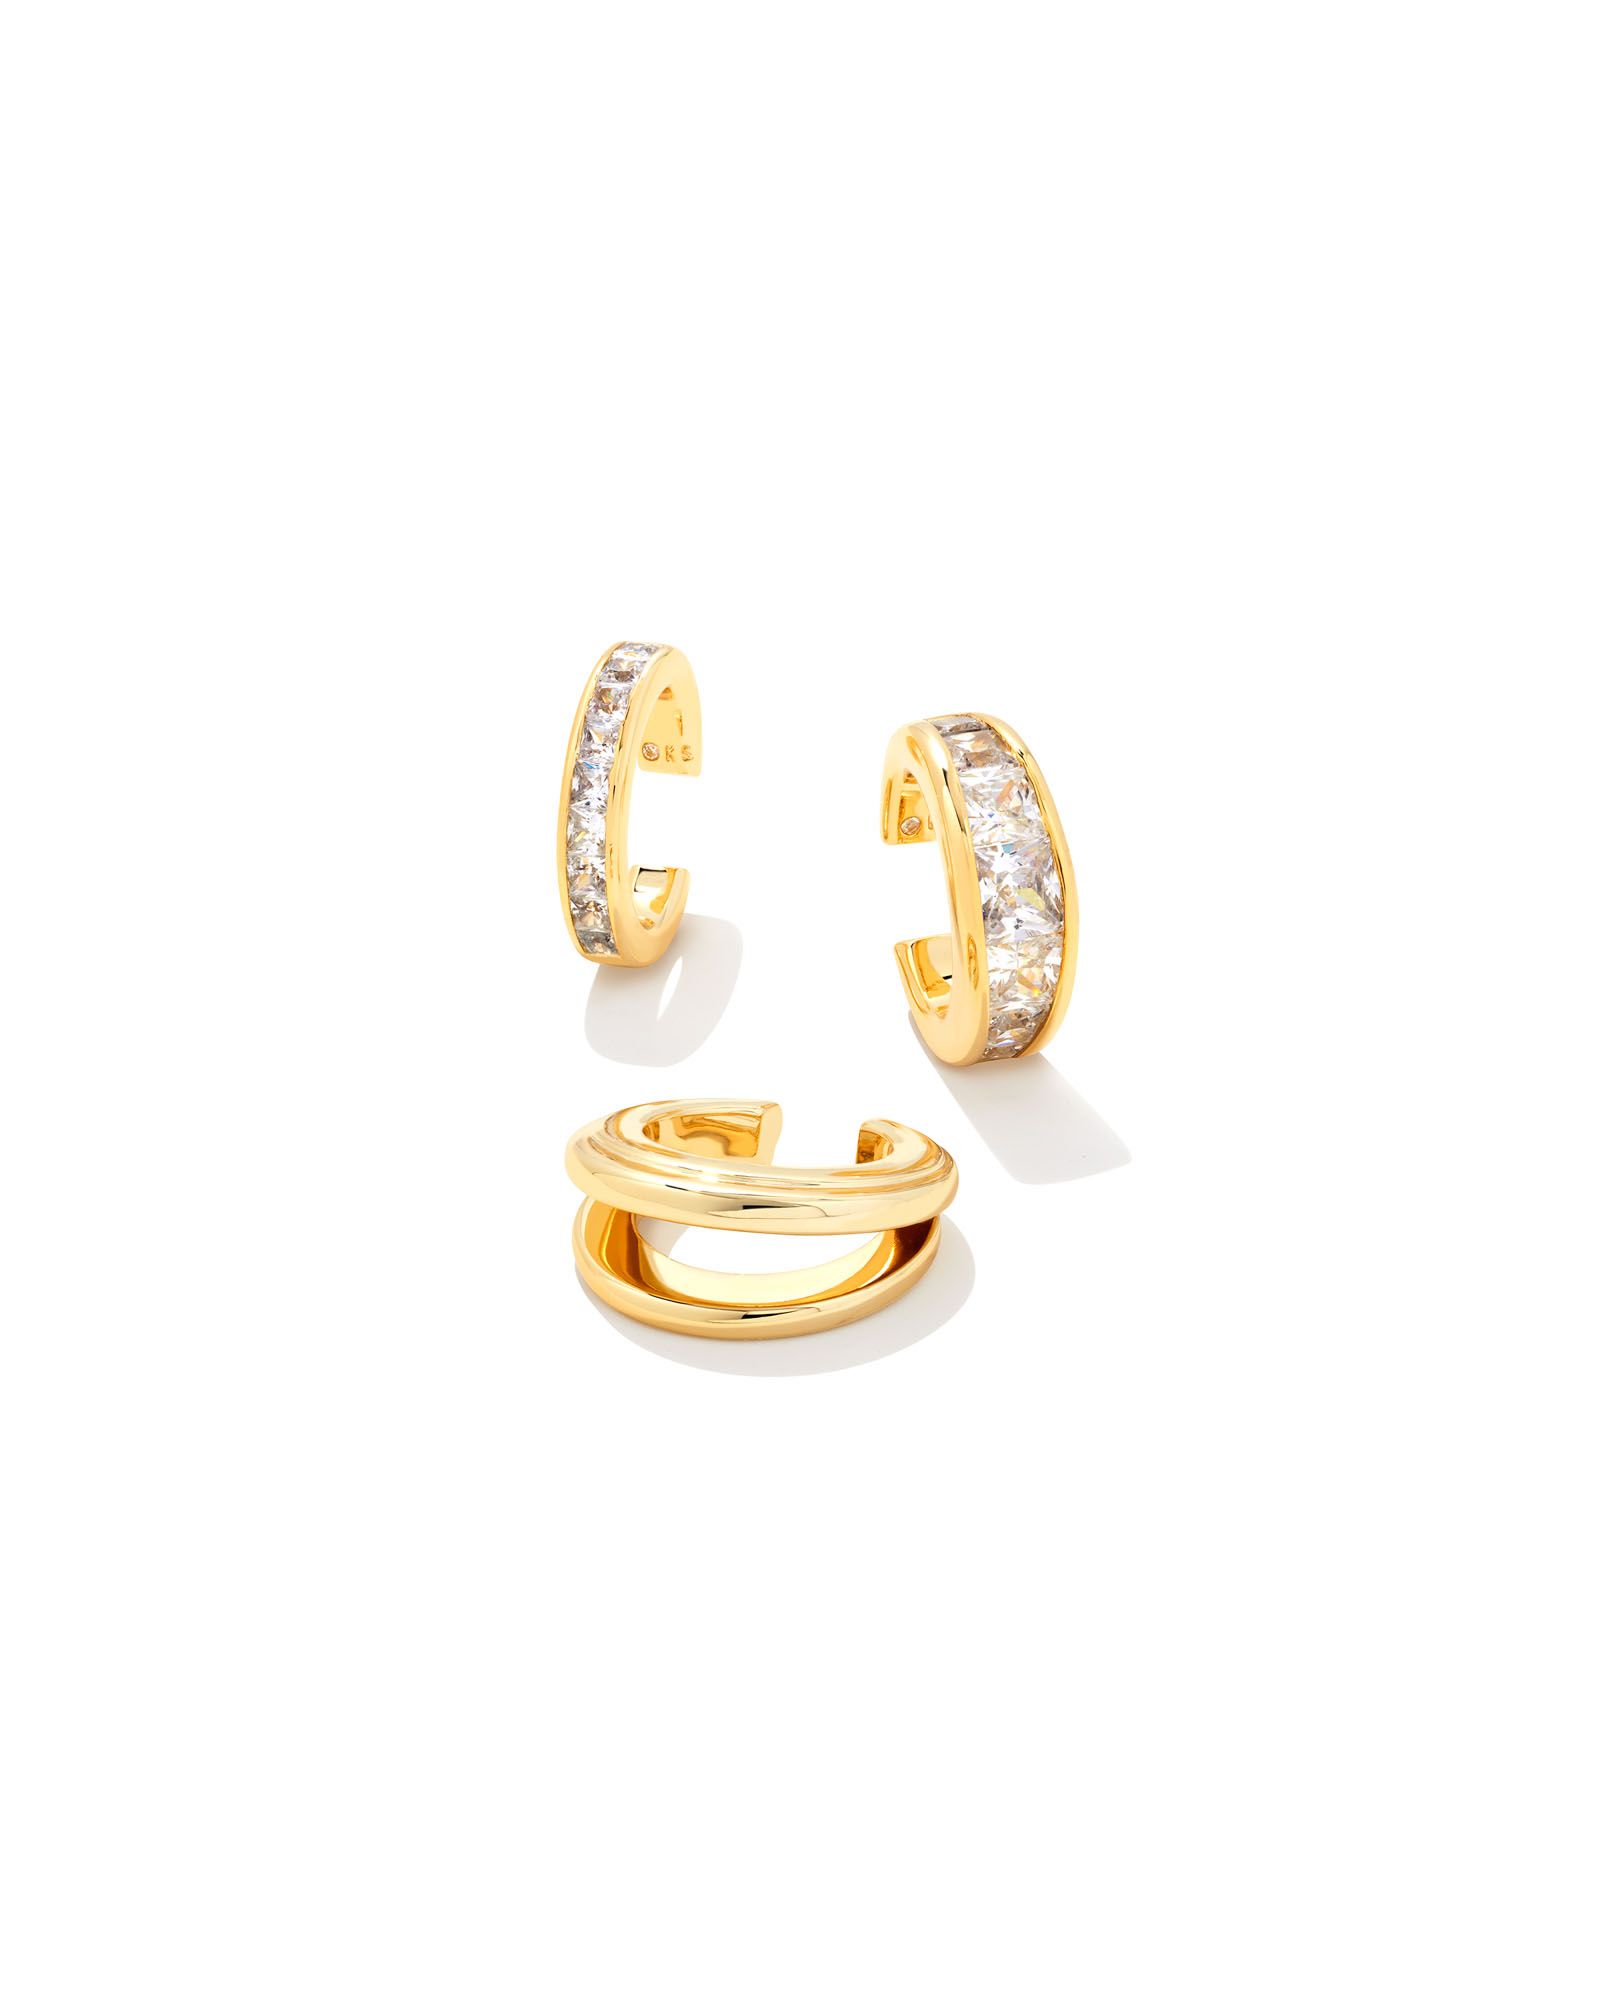 Parker Gold Ear Cuff Set in White Crystal | Kendra Scott | Kendra Scott